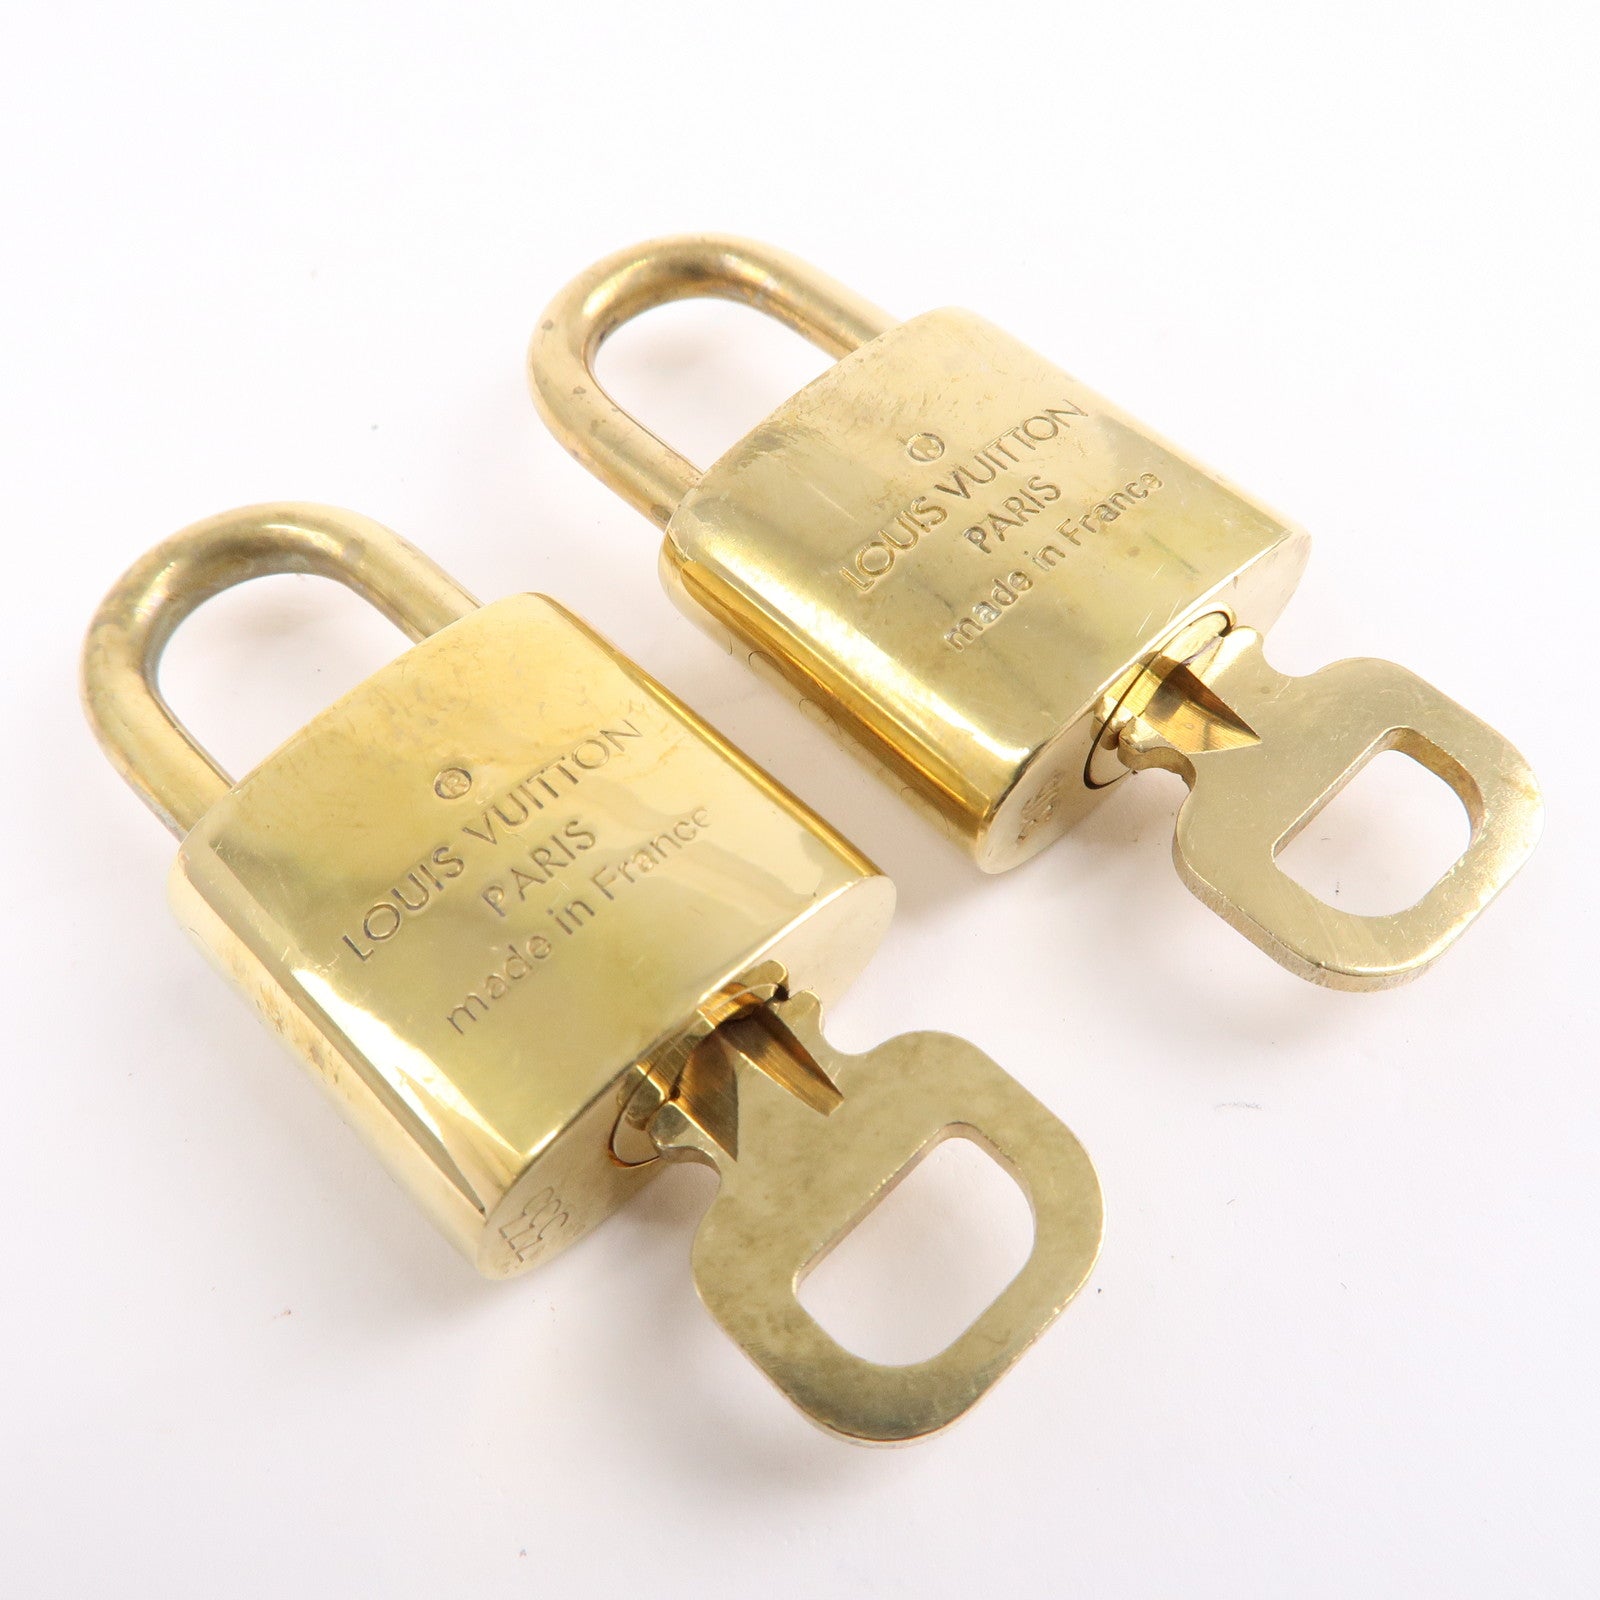 Authentic pre-owned Louis Vuitton lock & key set